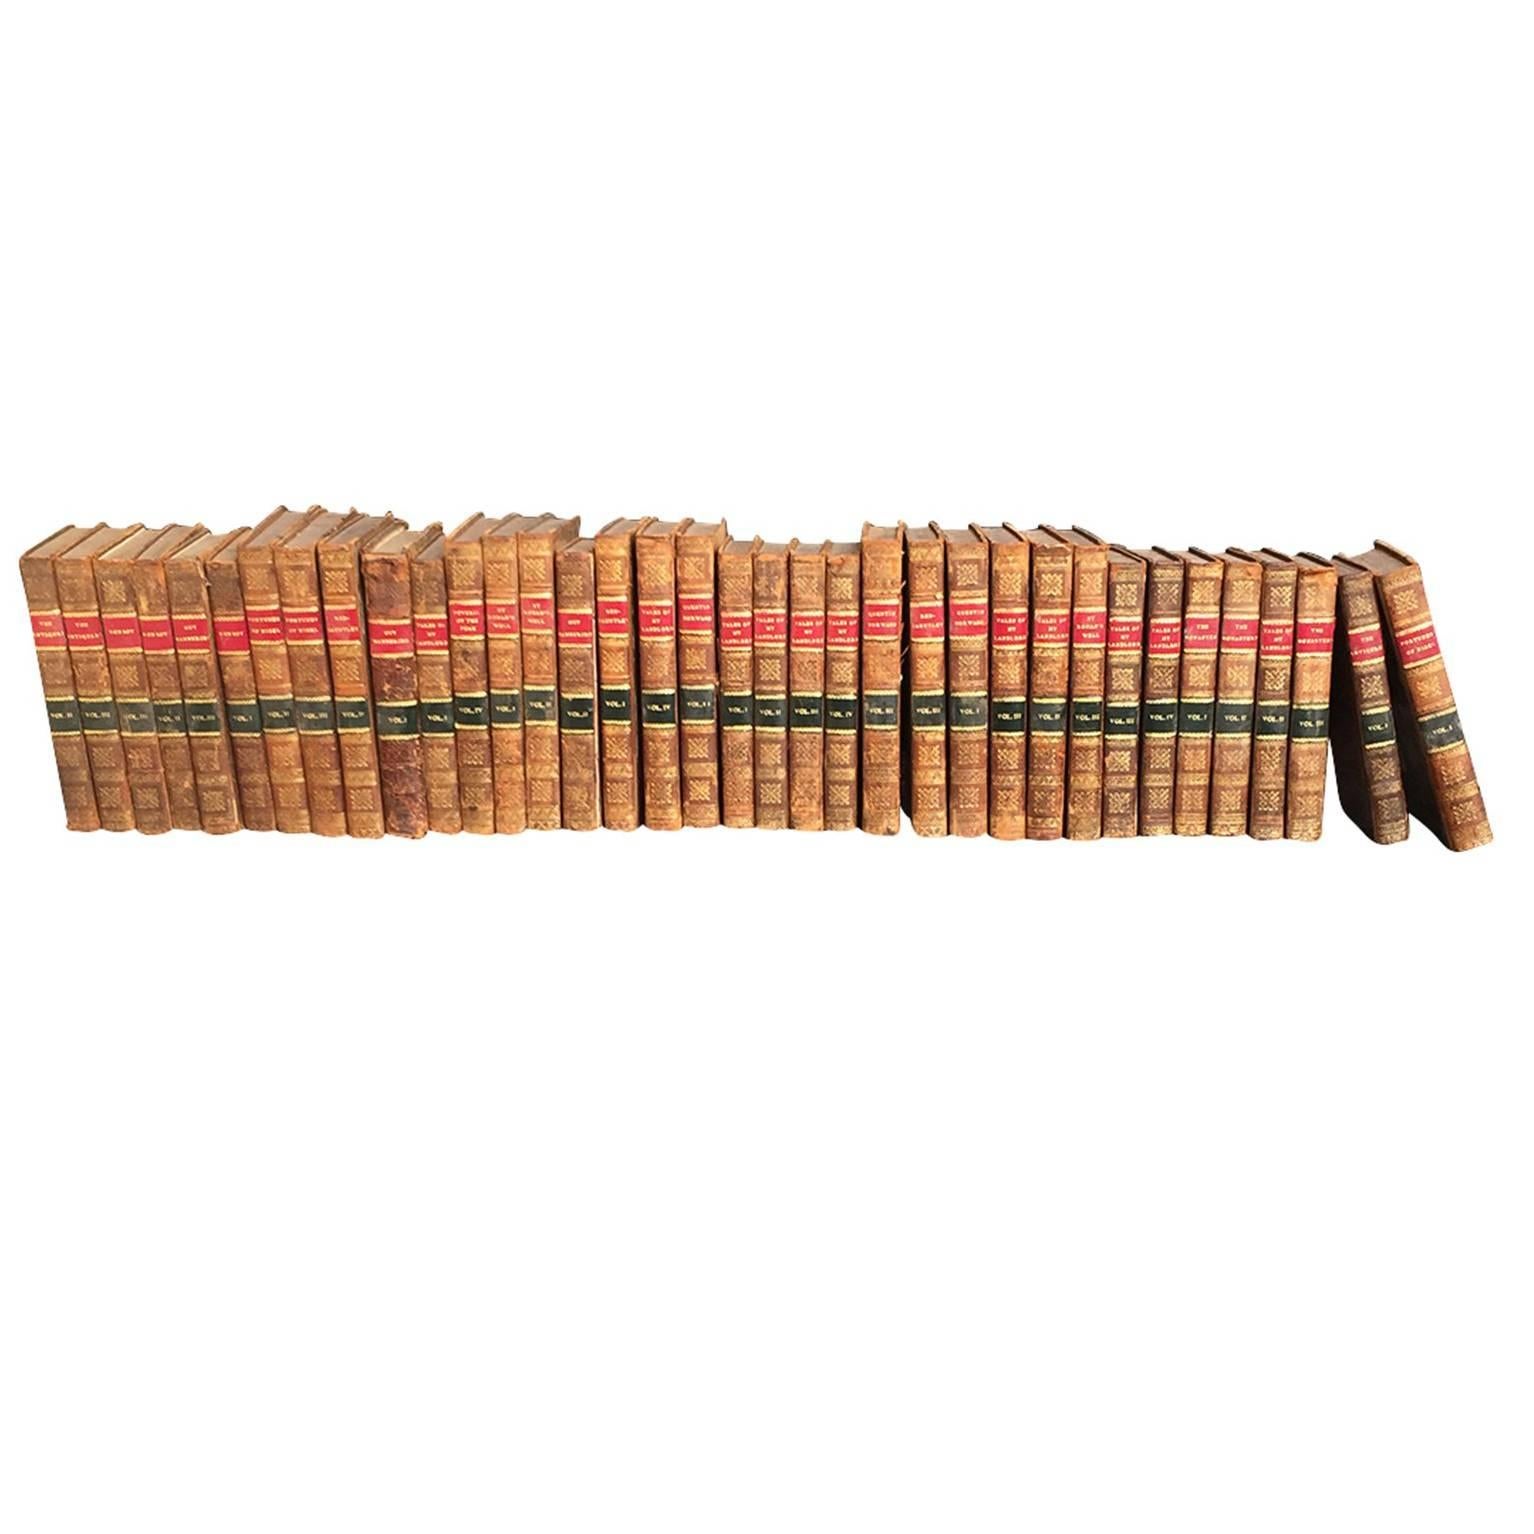 Group of 36, circa 1816-1828 Leather Bound Novels from Edinburgh, Scotland